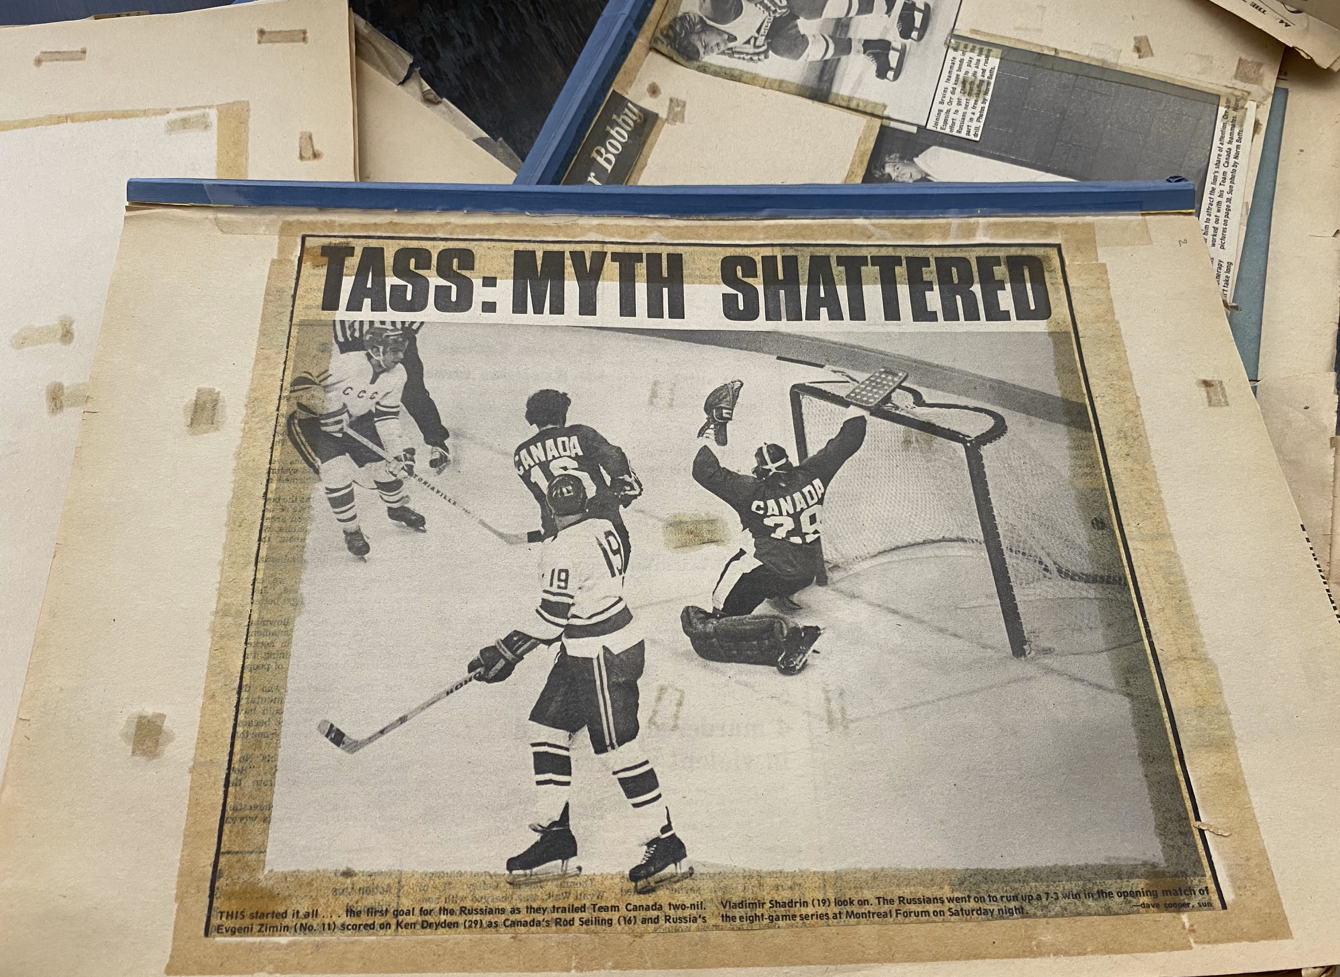 Tass: Myth Shattered - newspaper clipping